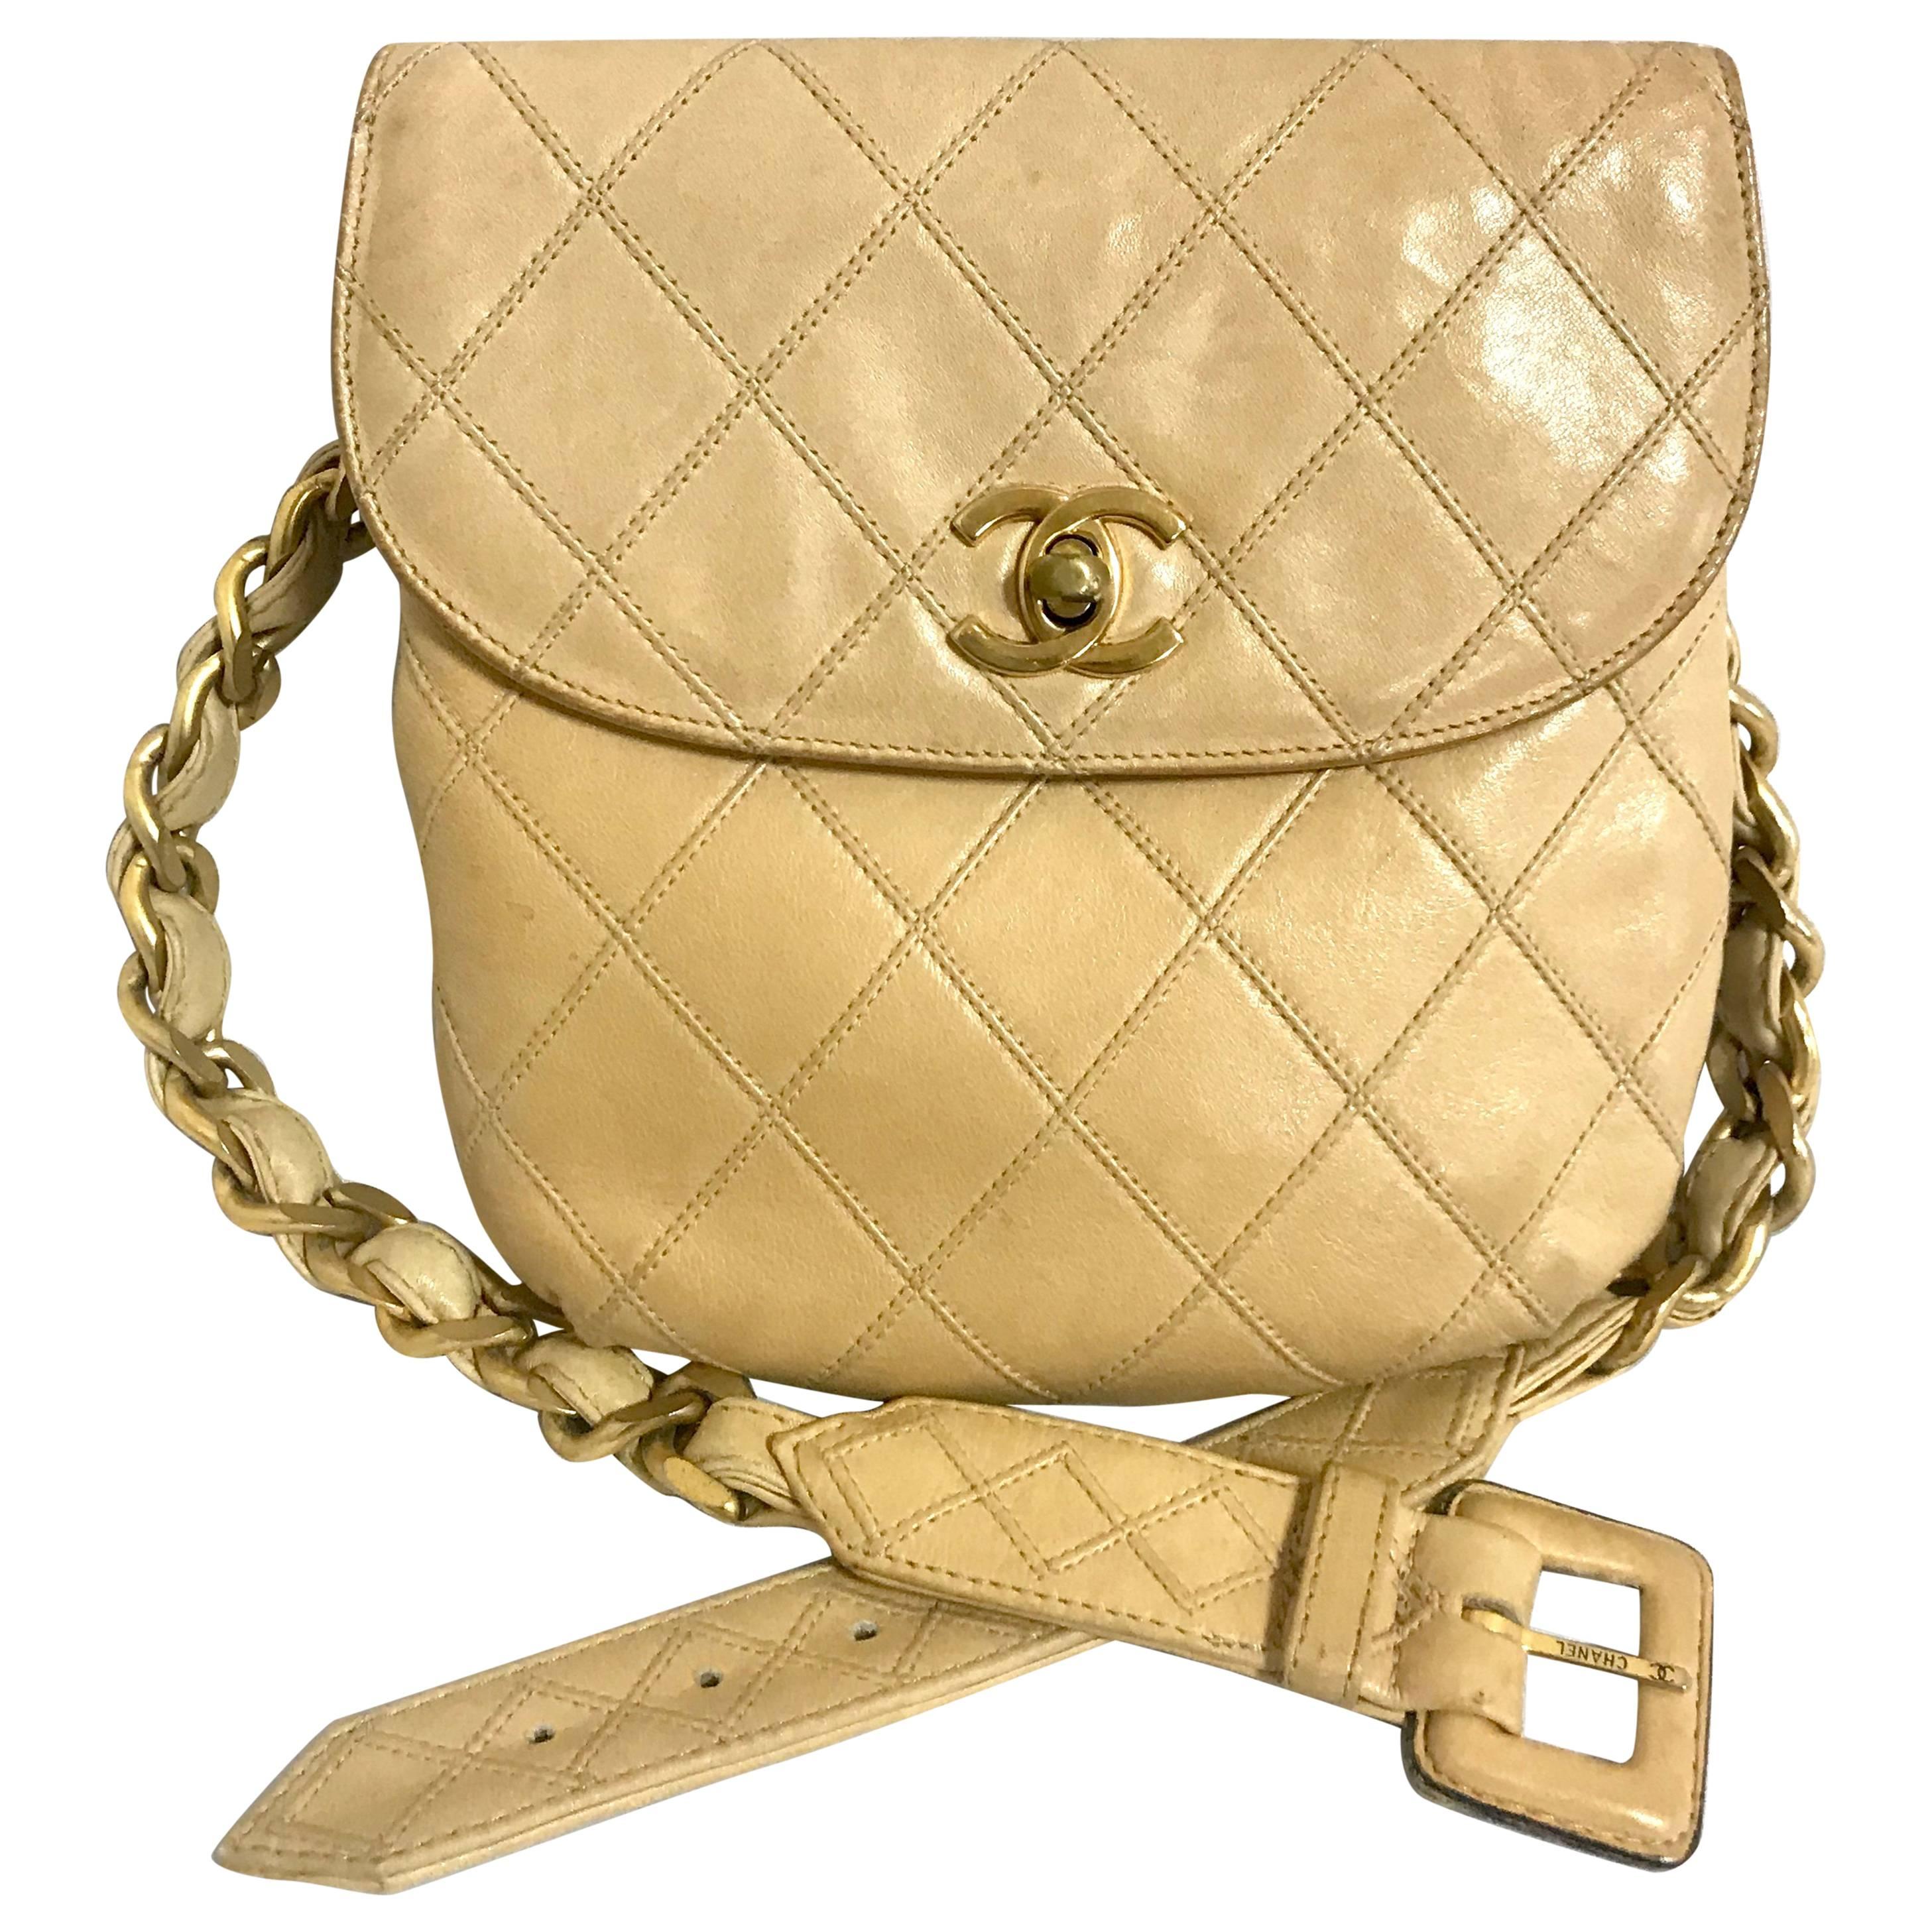 Vintage CHANEL beige leather waist purse, fanny pack, hip bag with golden CC.